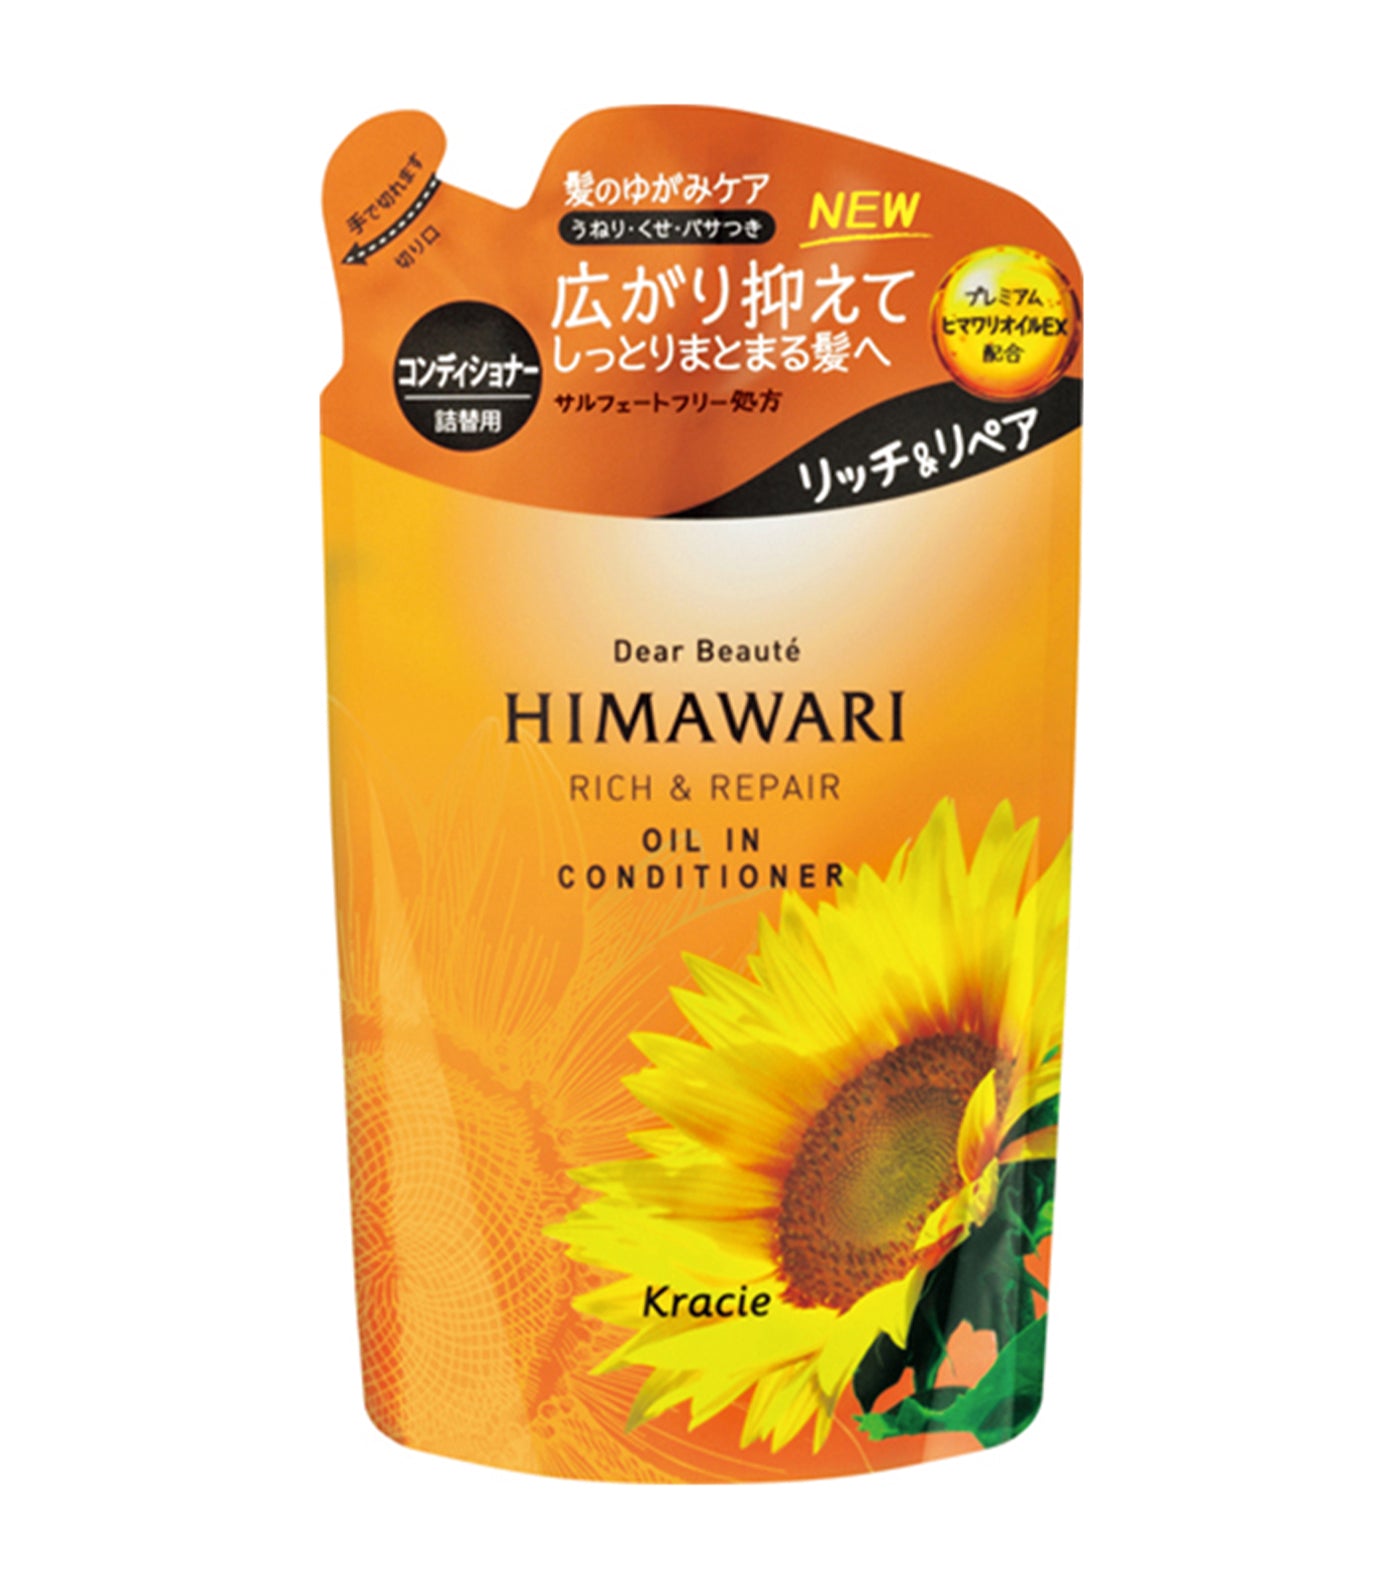 Dear Beaute Himawari Rich and Repair Oil in Conditioner Refill Pack